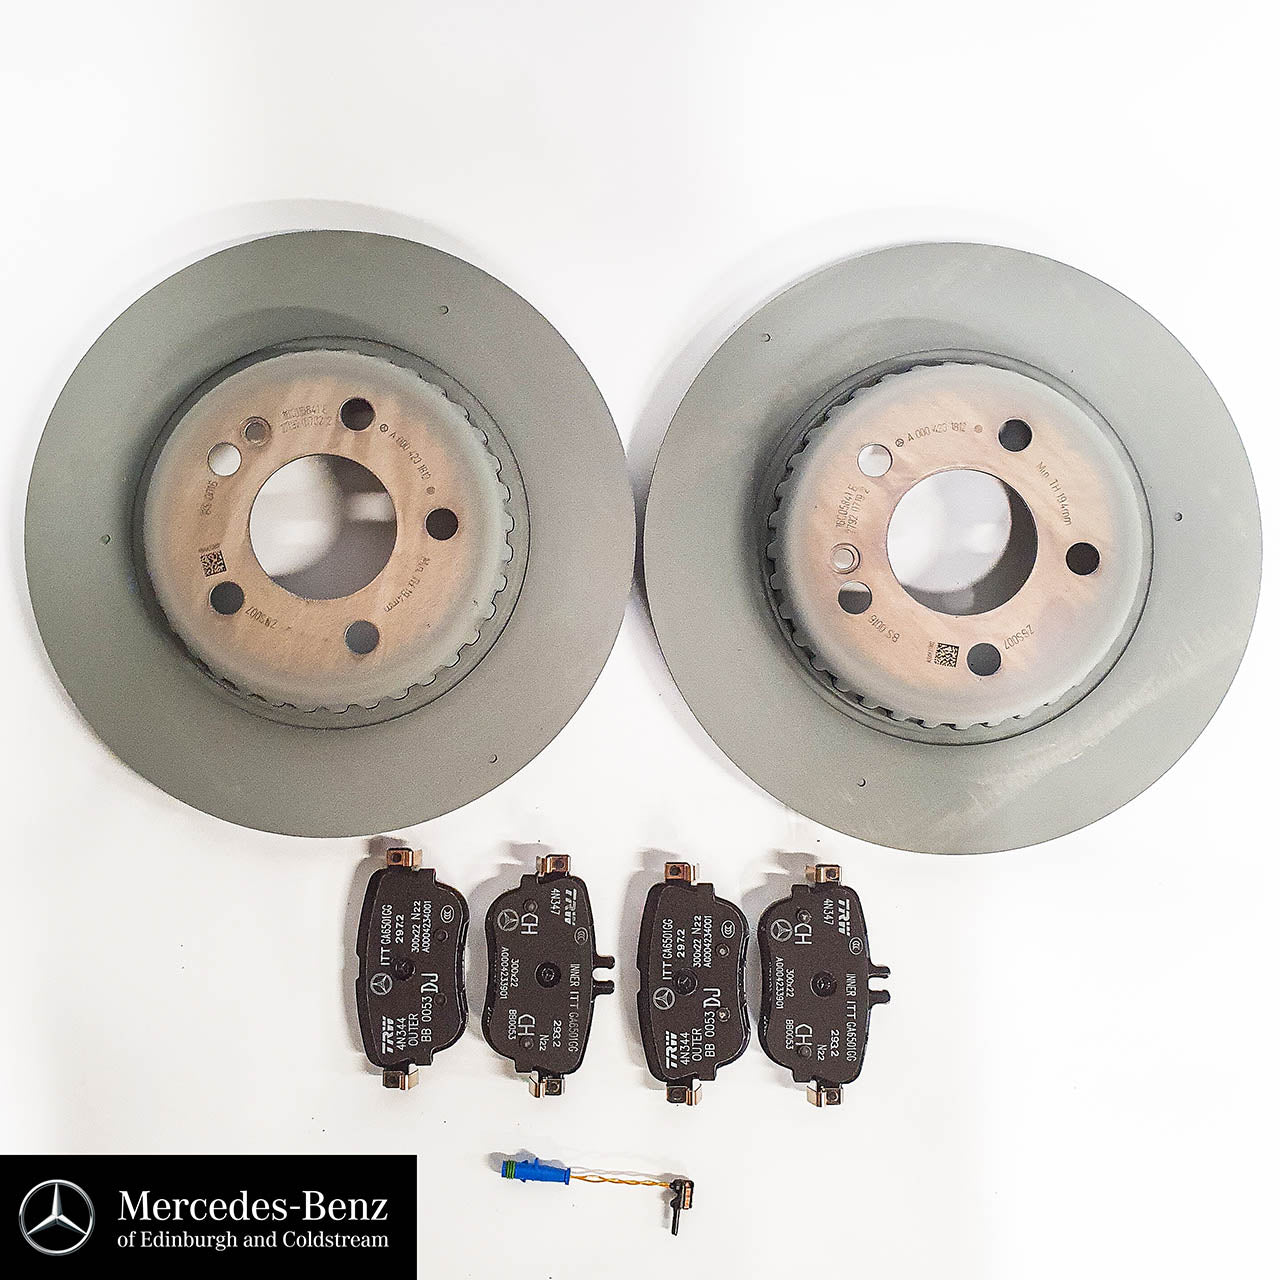 Genuine Mercedes-Benz brake discs, pads & wear sensor REAR E Class C Class CLS GLC